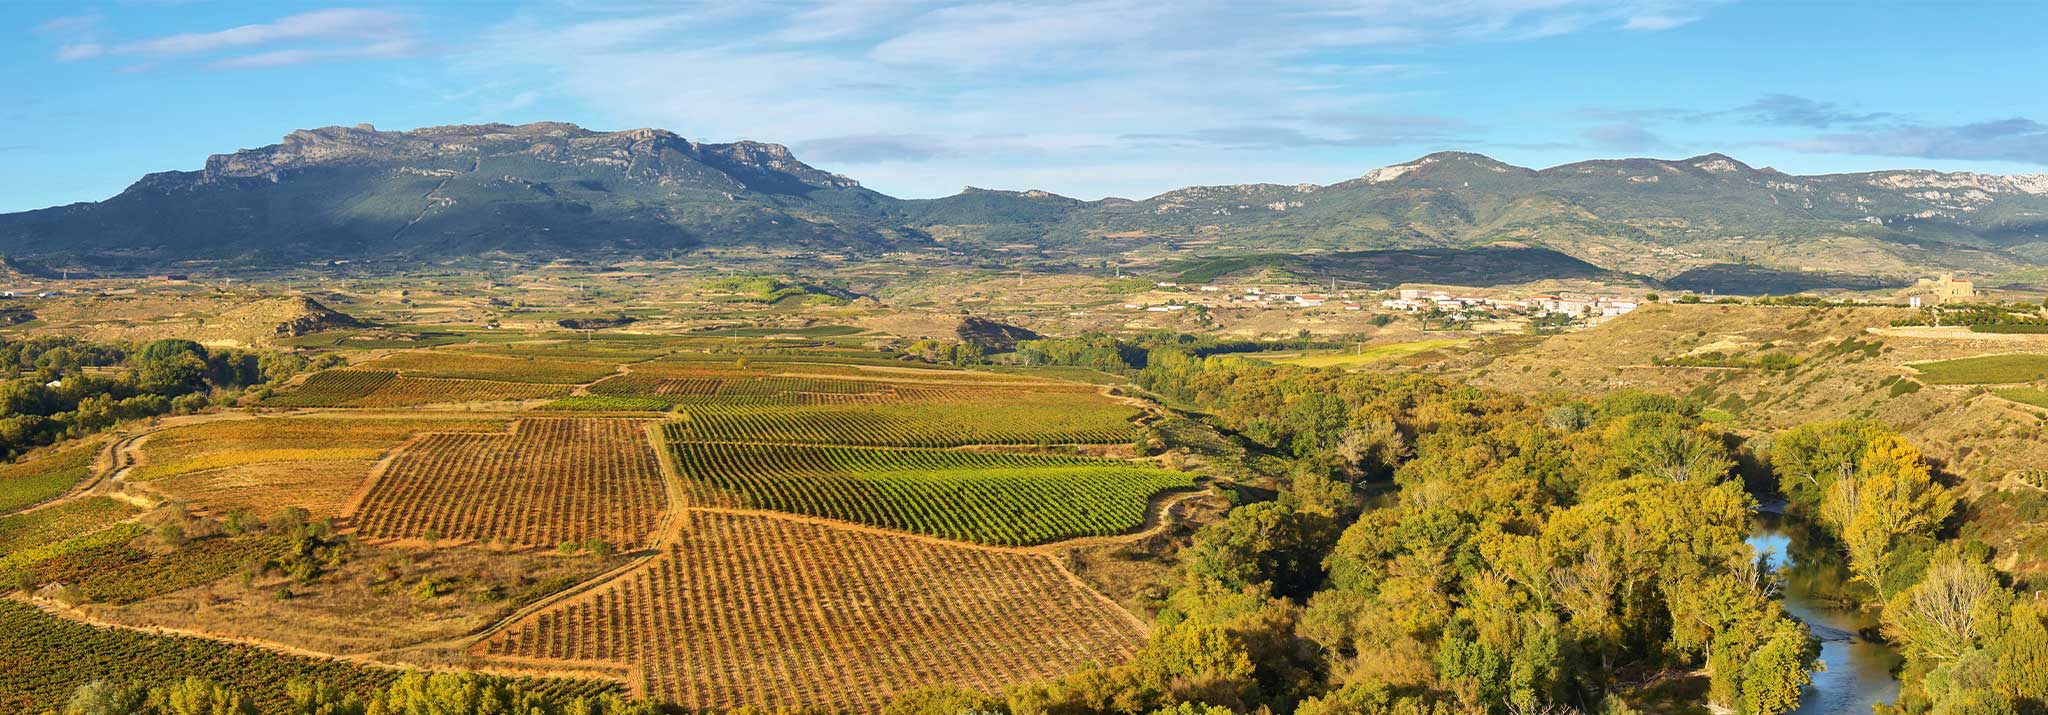 landscape-with-vineyards-at-la-rioja-spain-rioja-alta